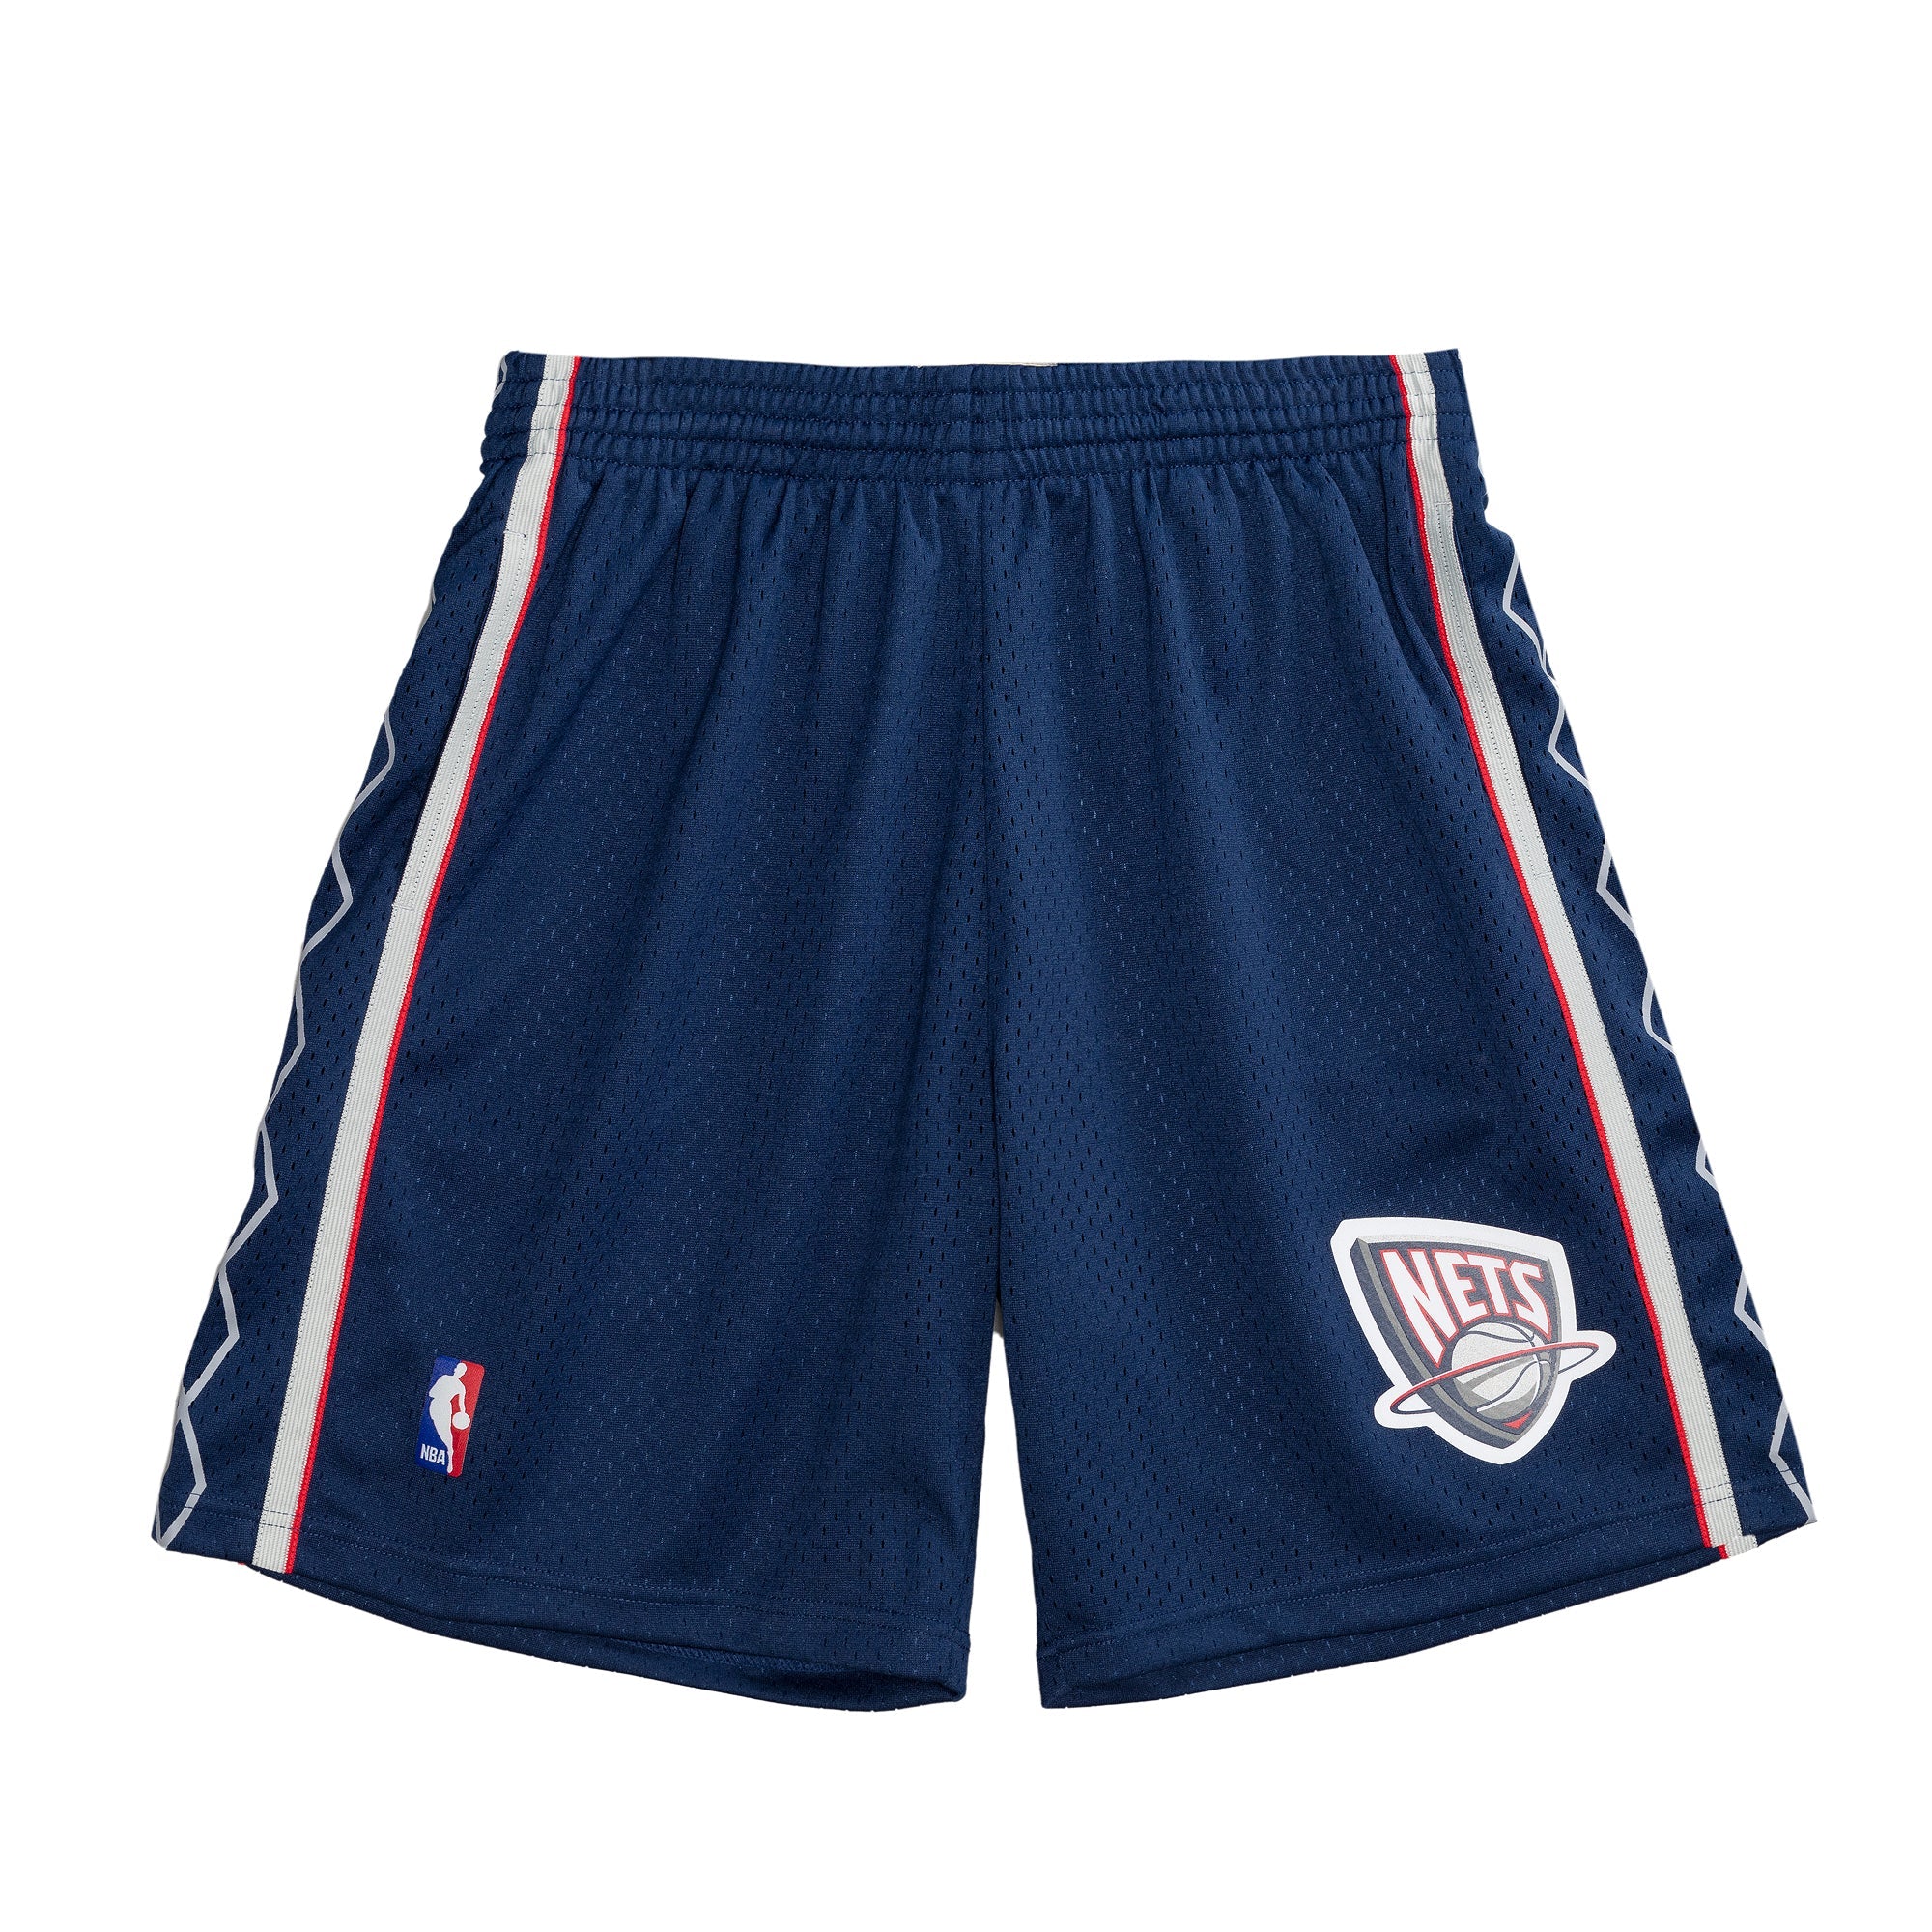 New Jersey Nets Swingman Basketball Shorts Adidas New with Tags NBA Nwt